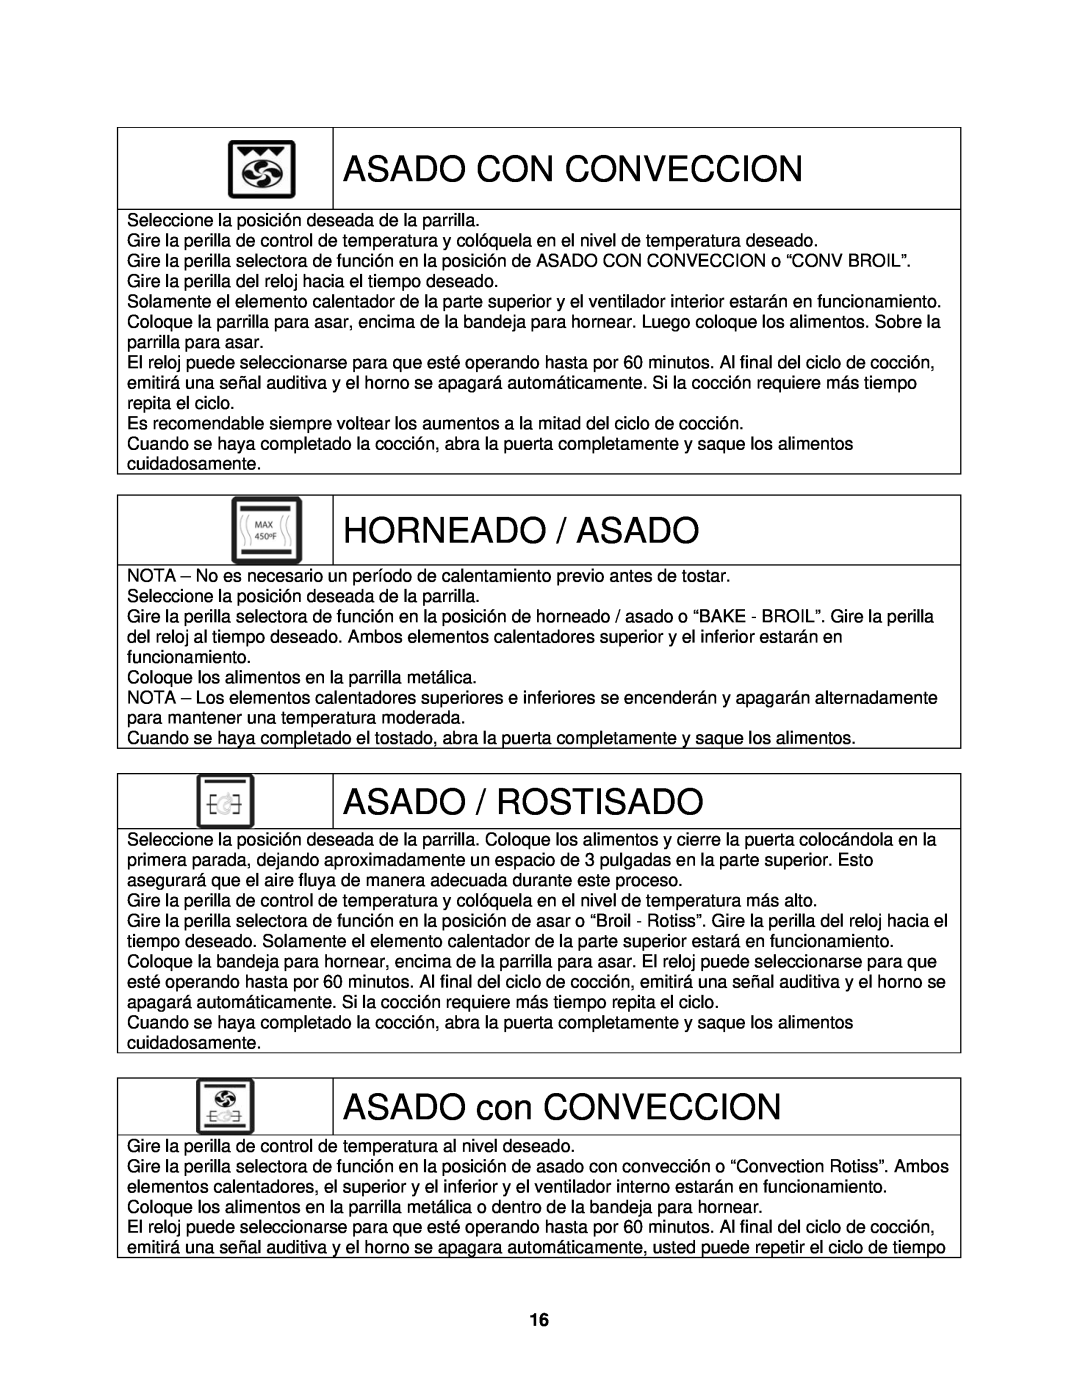 Avanti MKB42B instruction manual Asado Con Conveccion, Horneado / Asado, Asado / Rostisado, ASADO con CONVECCION 